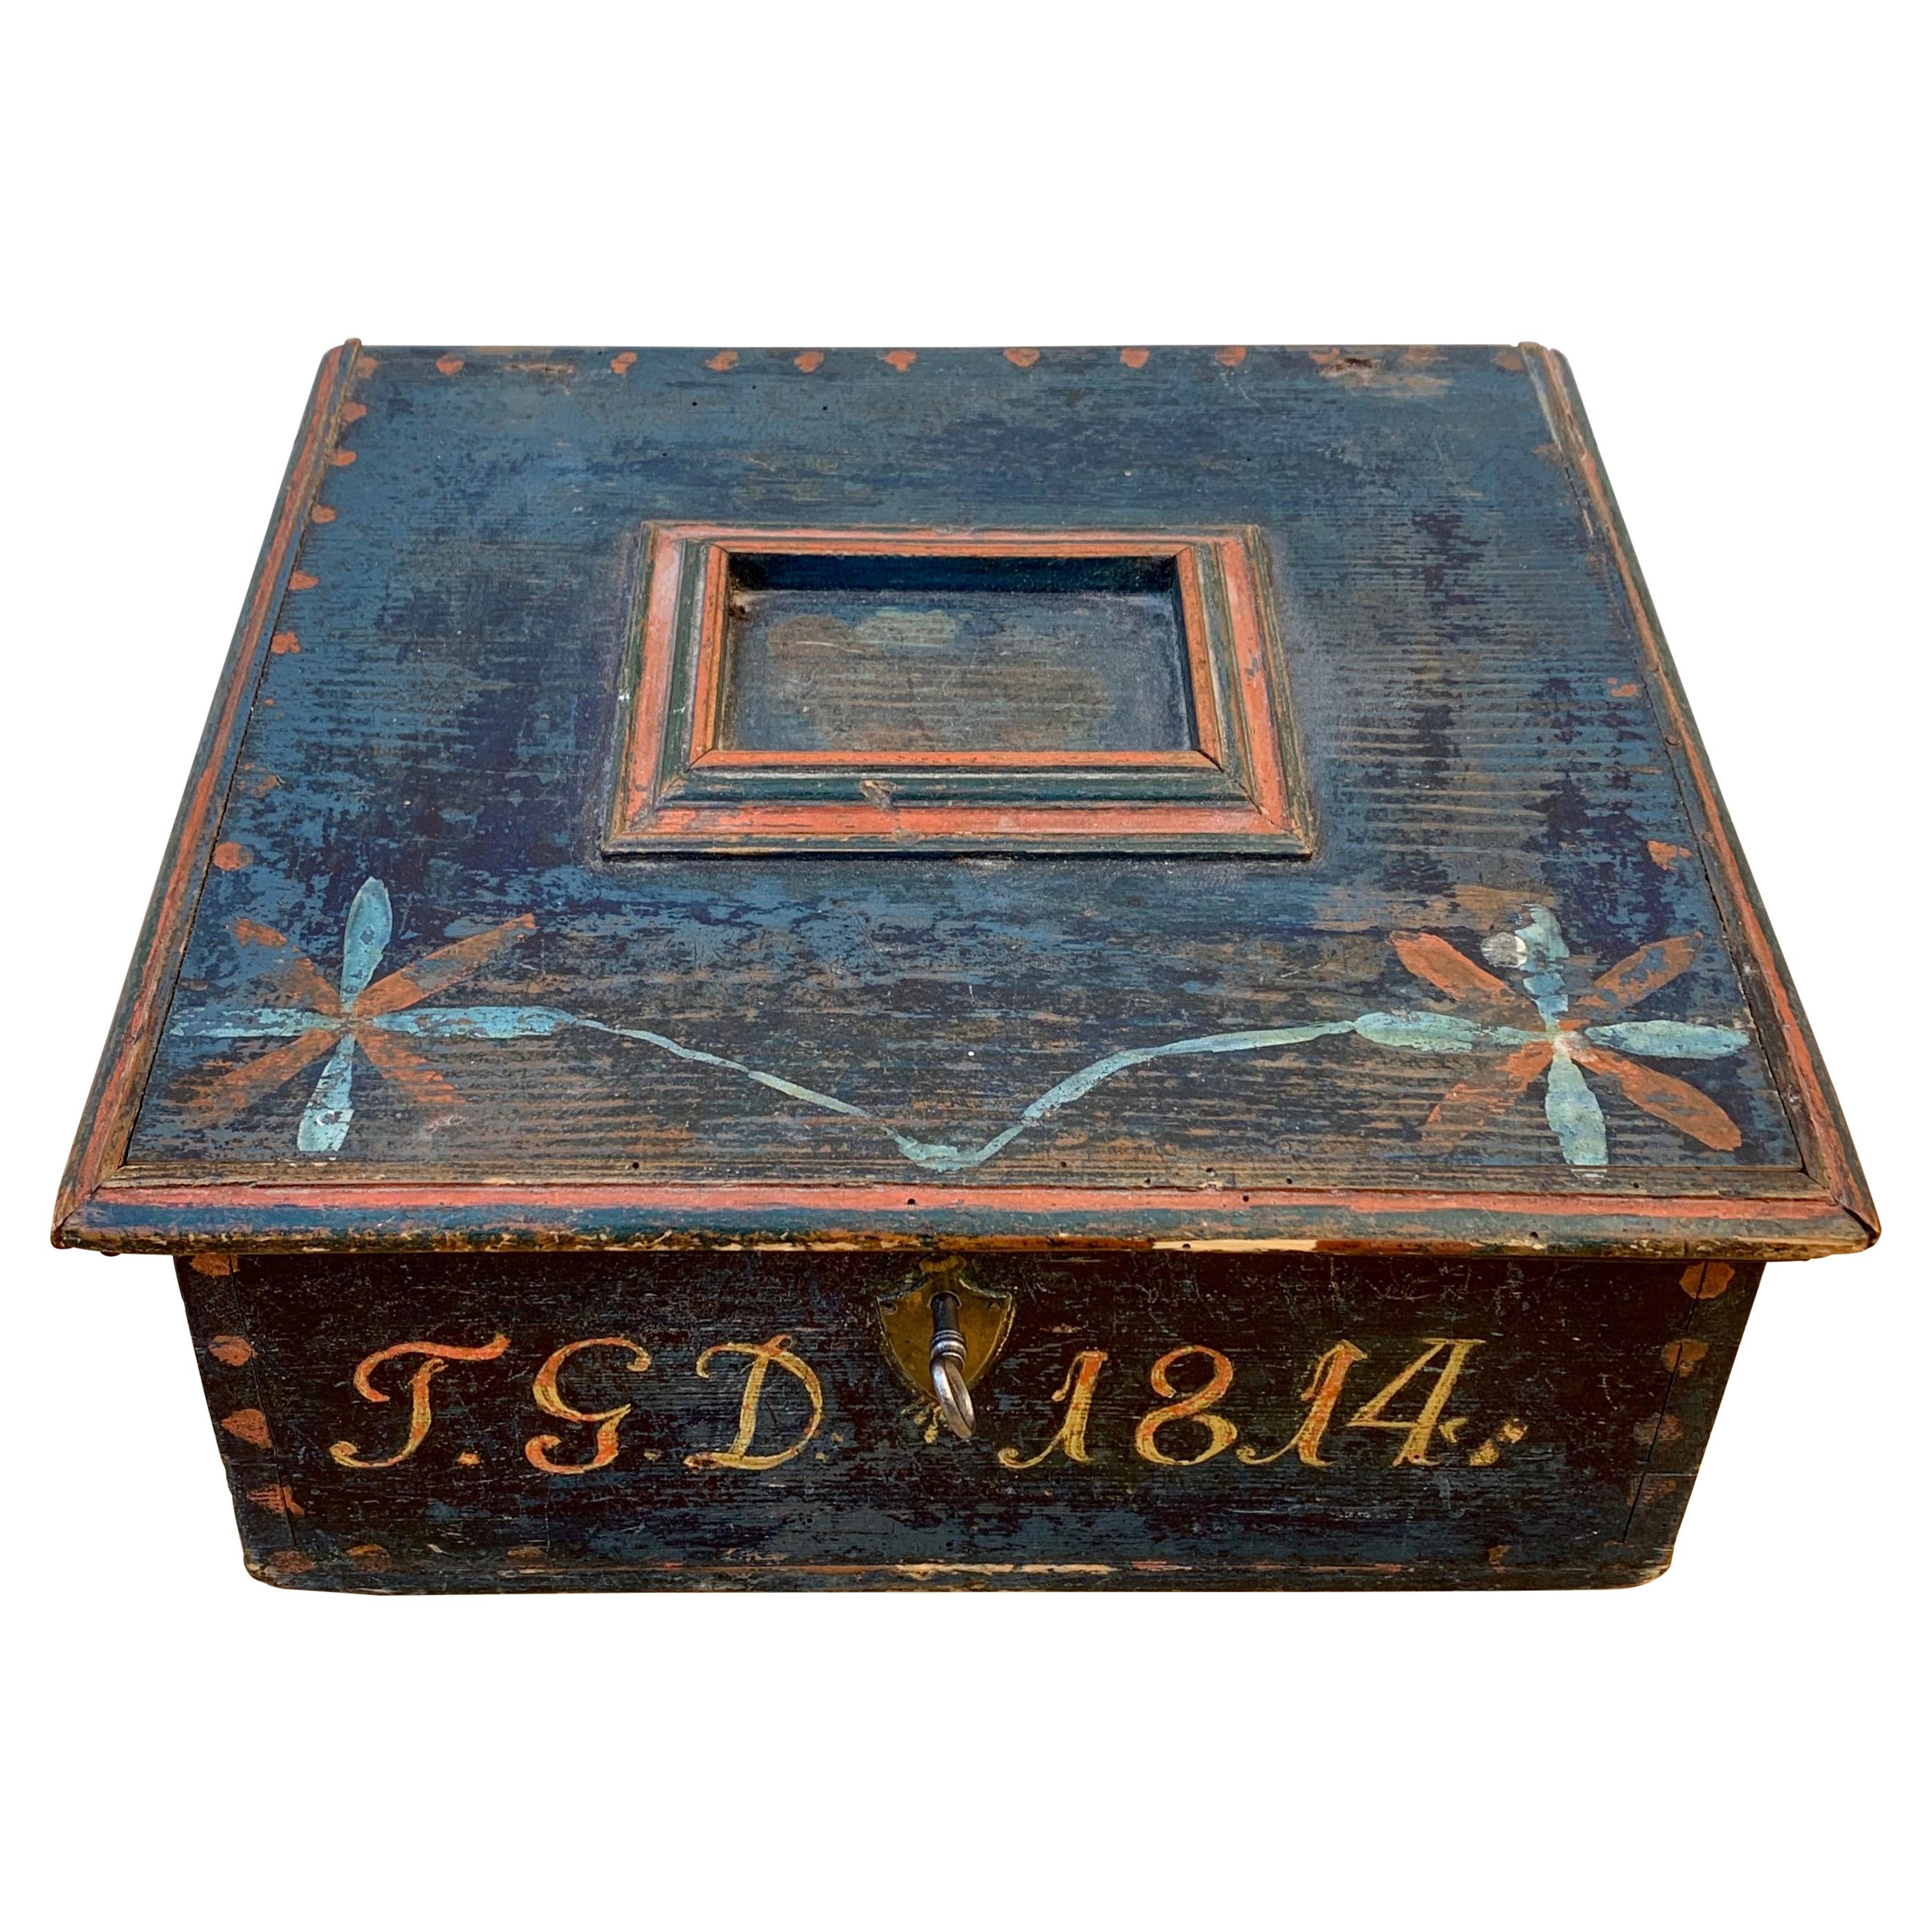 Swedish Wooden Folk Art Box With Originally Paint, Dated 1814